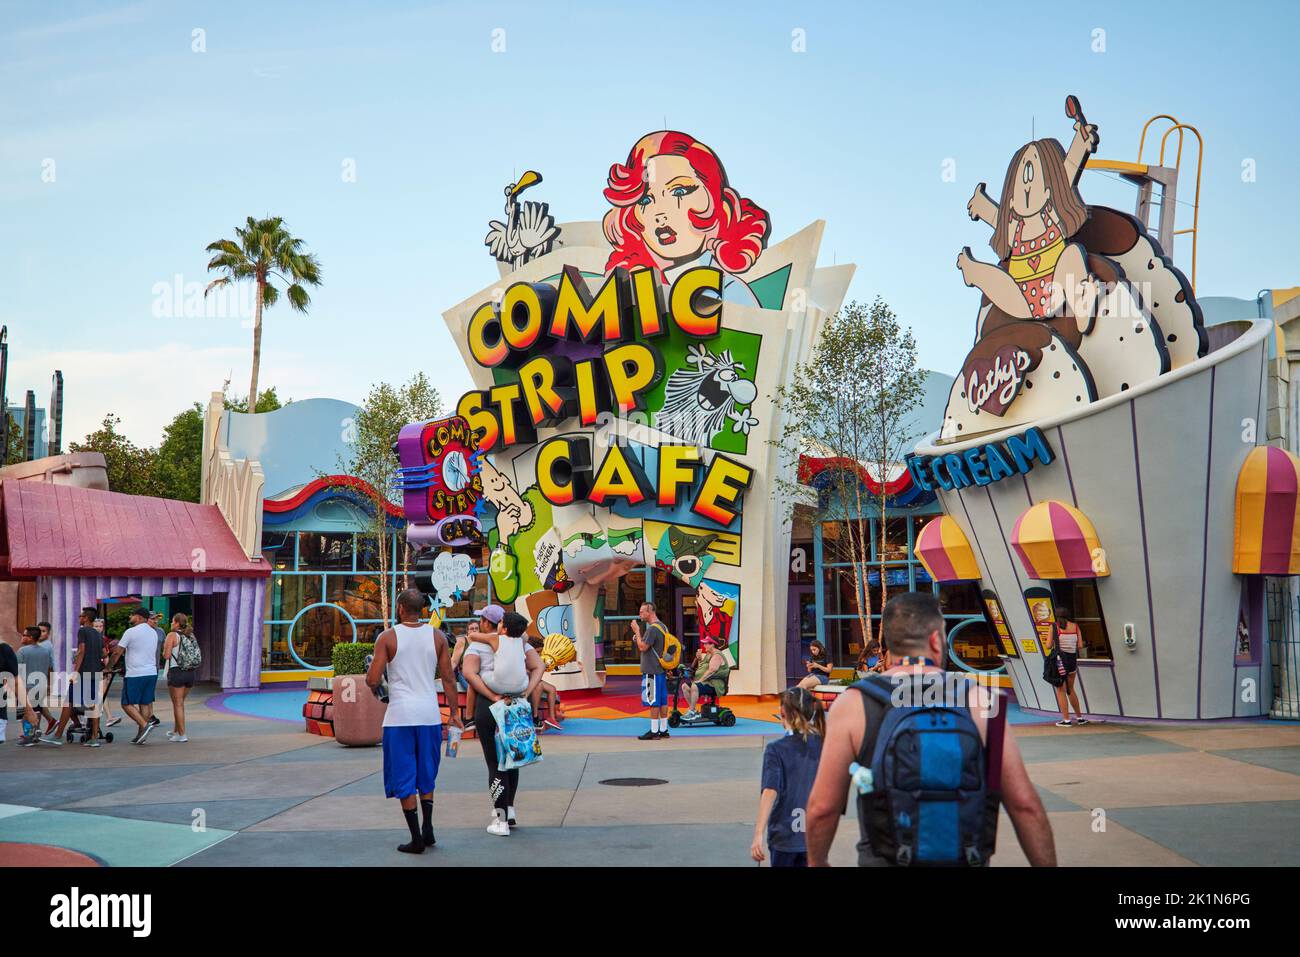 Universal Studios Florida tema Comic Strip Cafe Foto Stock